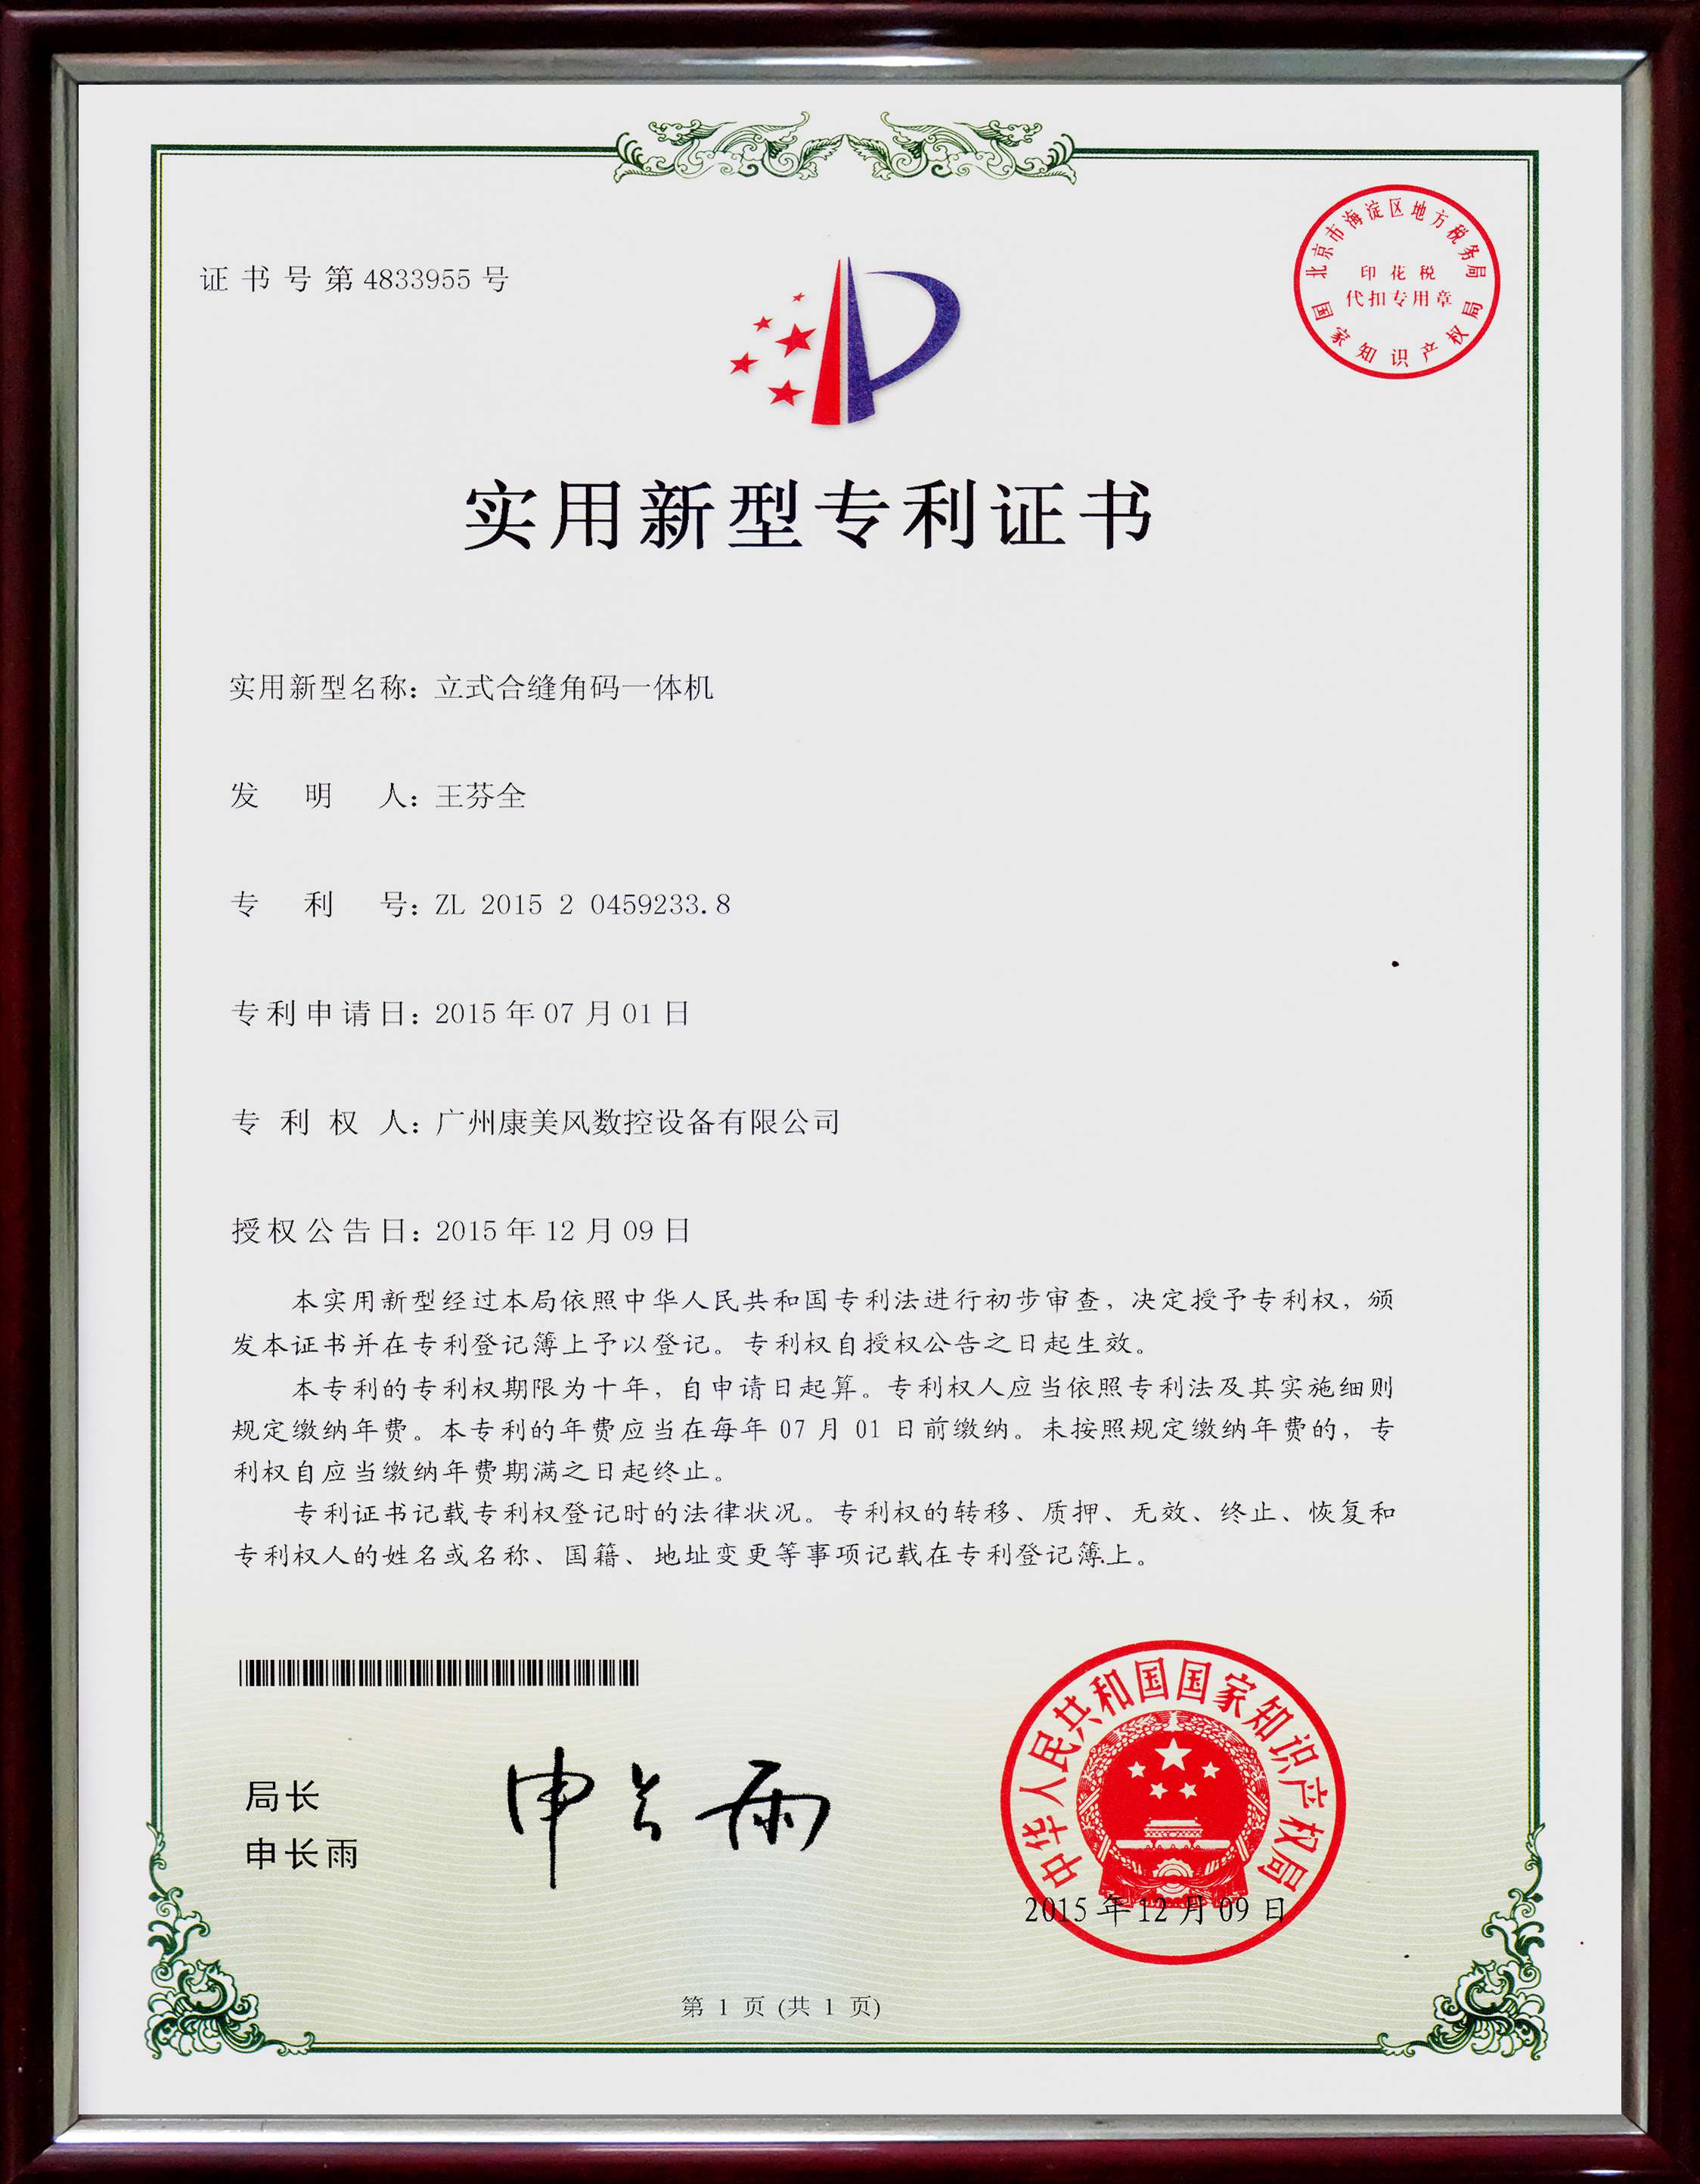 Vertical joint corner code machine patent certificate